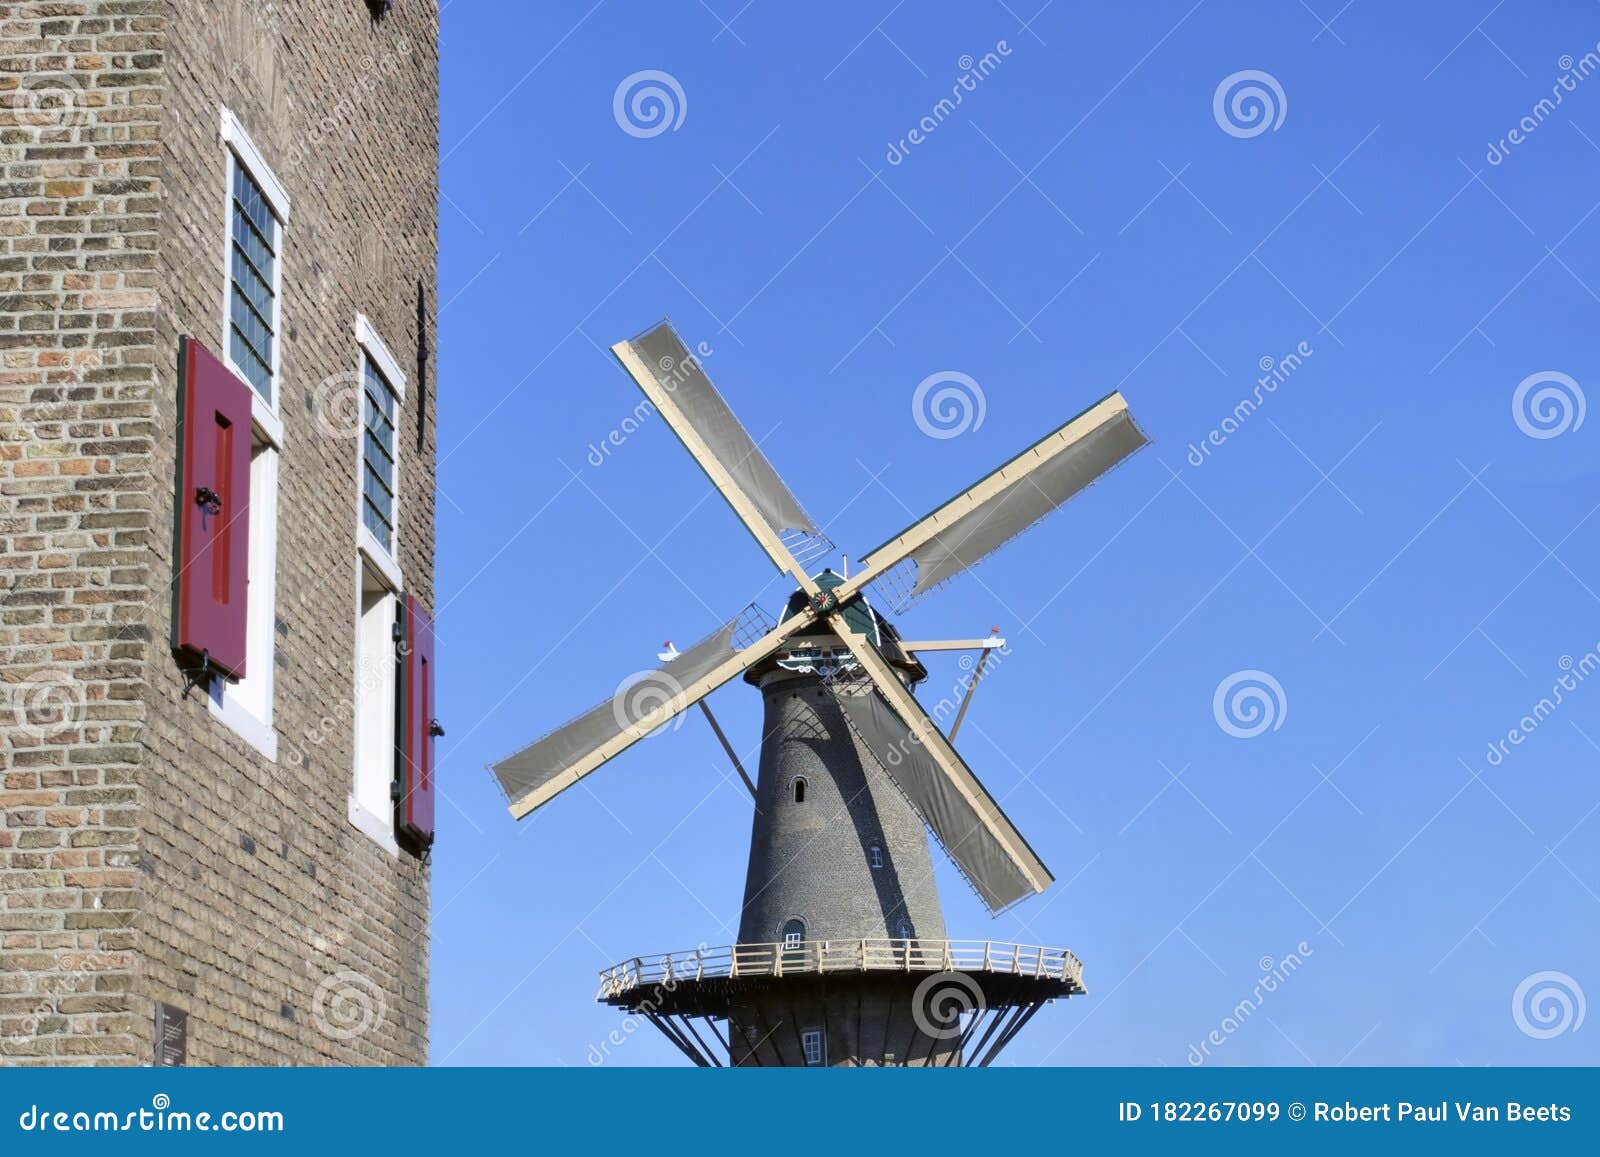 the molen de roos windmill in delft